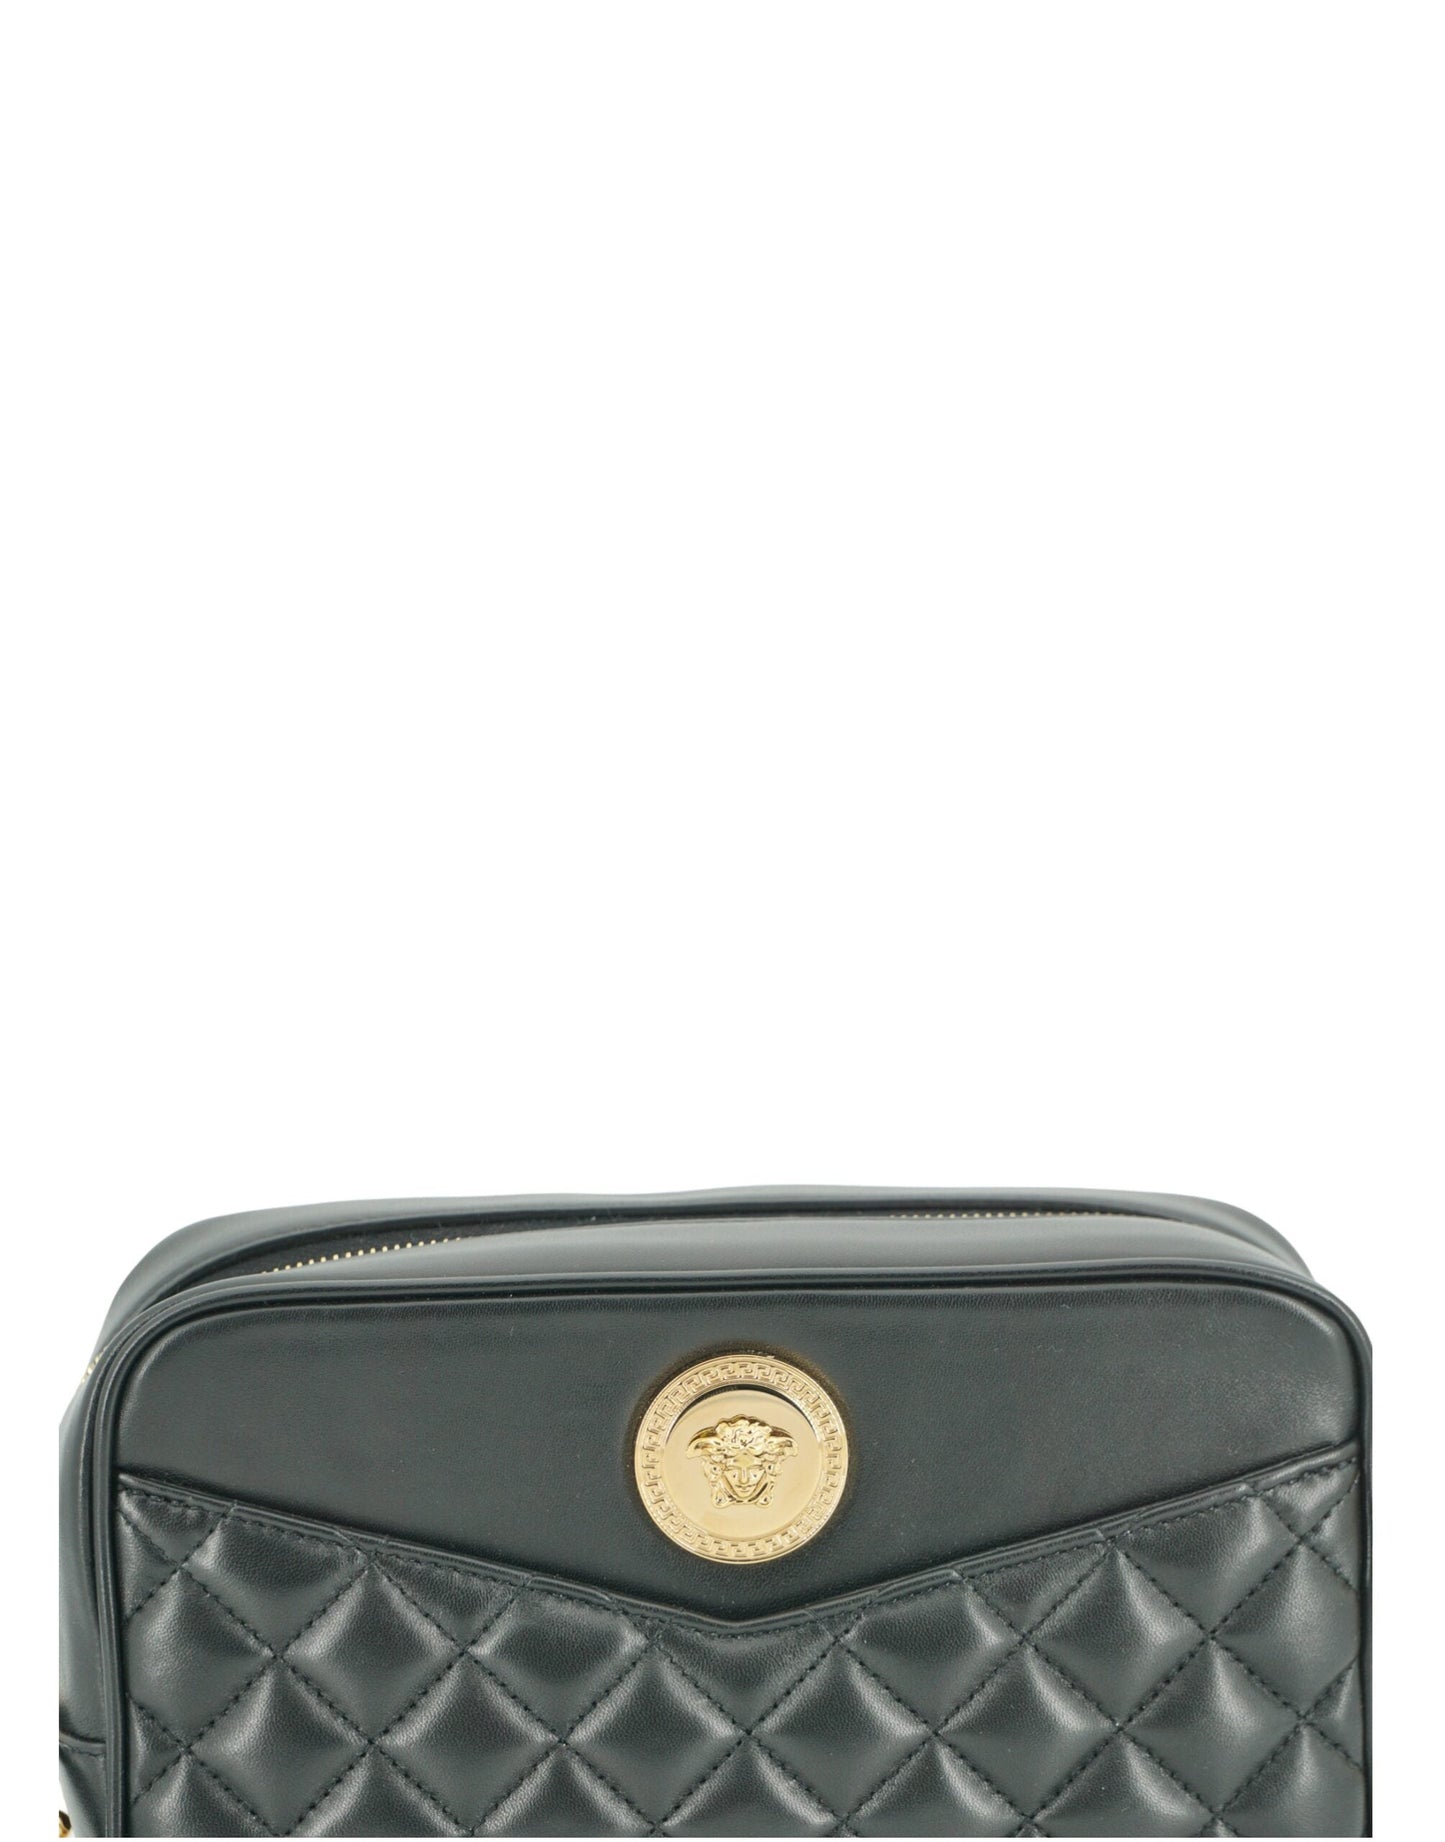 Versace Black Lamb Leather Medium Camera Shoulder Bag | Fashionsarah.com